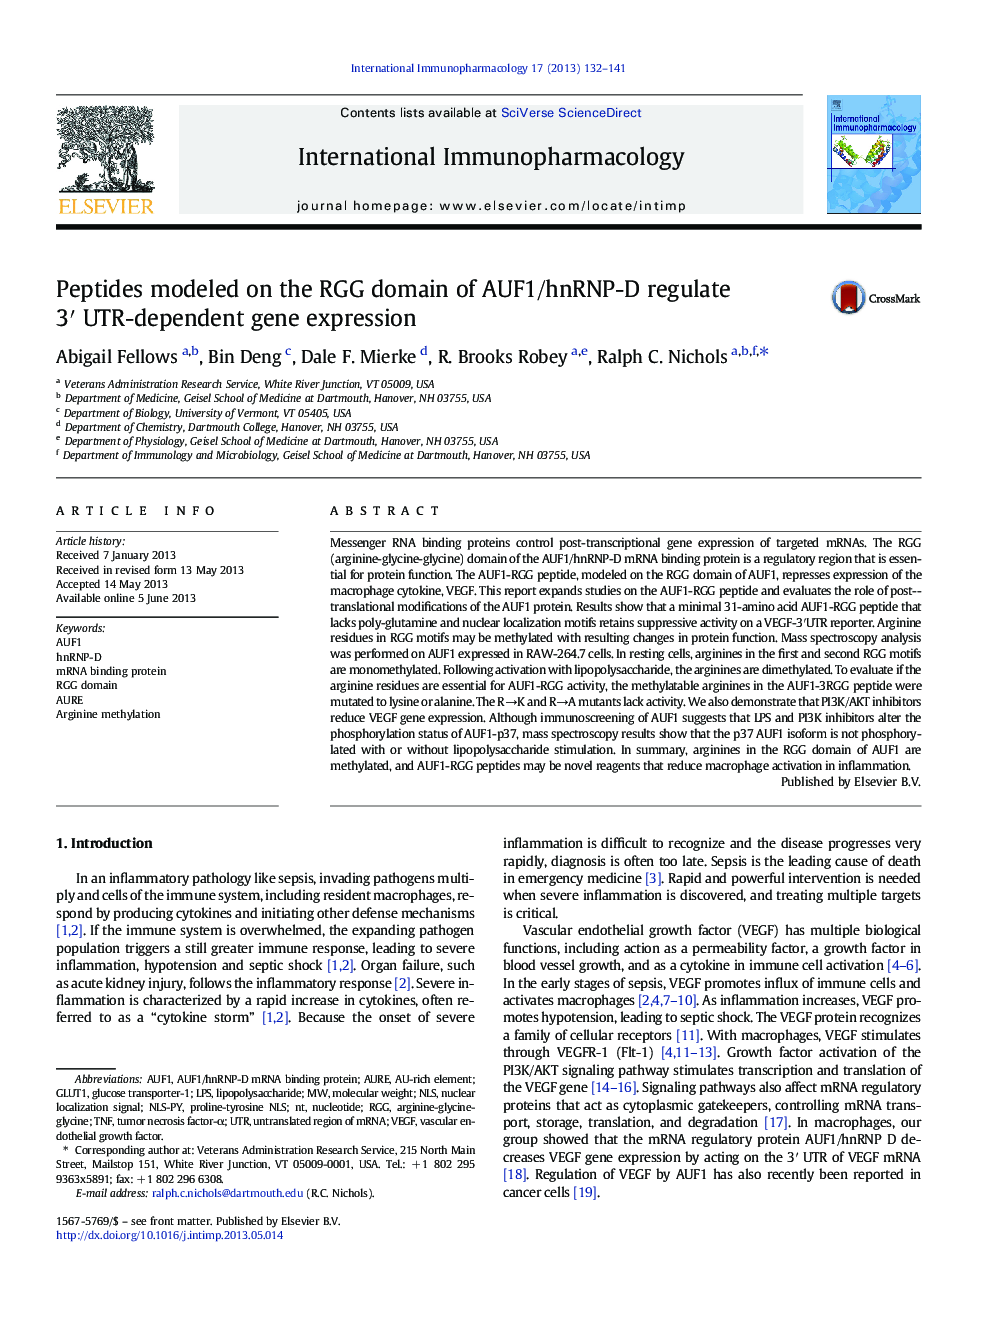 Peptides modeled on the RGG domain of AUF1/hnRNP-D regulate 3â² UTR-dependent gene expression